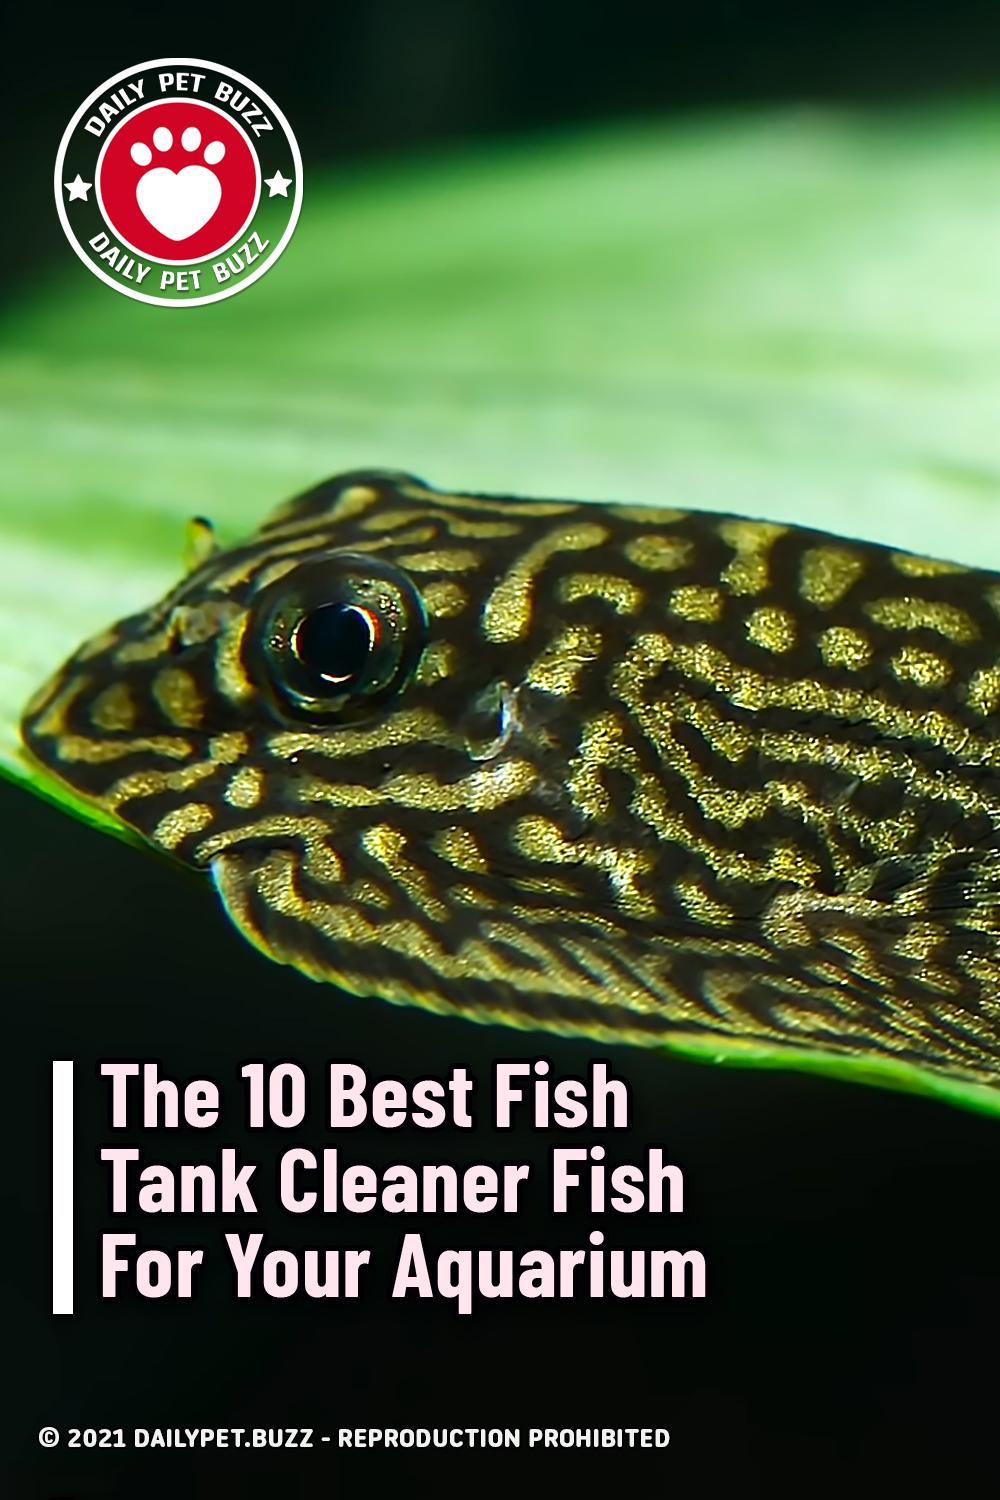 The 10 Best Fish Tank Cleaner Fish For Your Aquarium